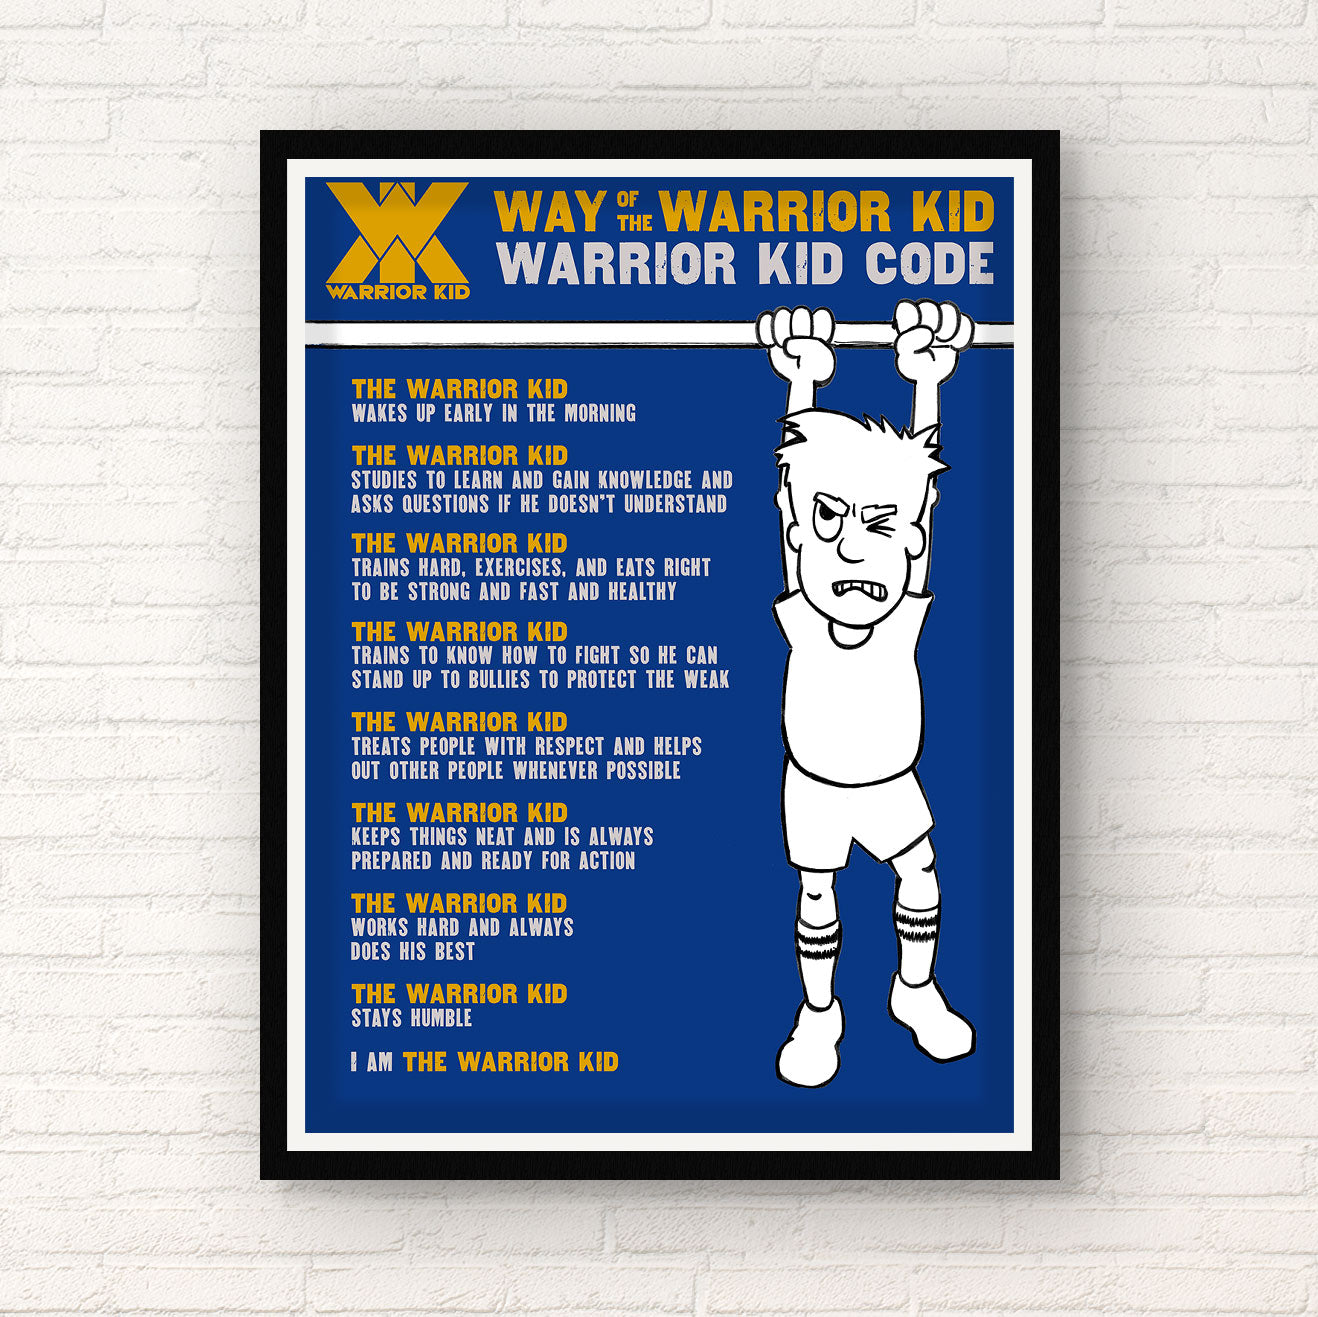 [SIGNED] Jocko | Way of the Warrior Kid Warrior Kid Code